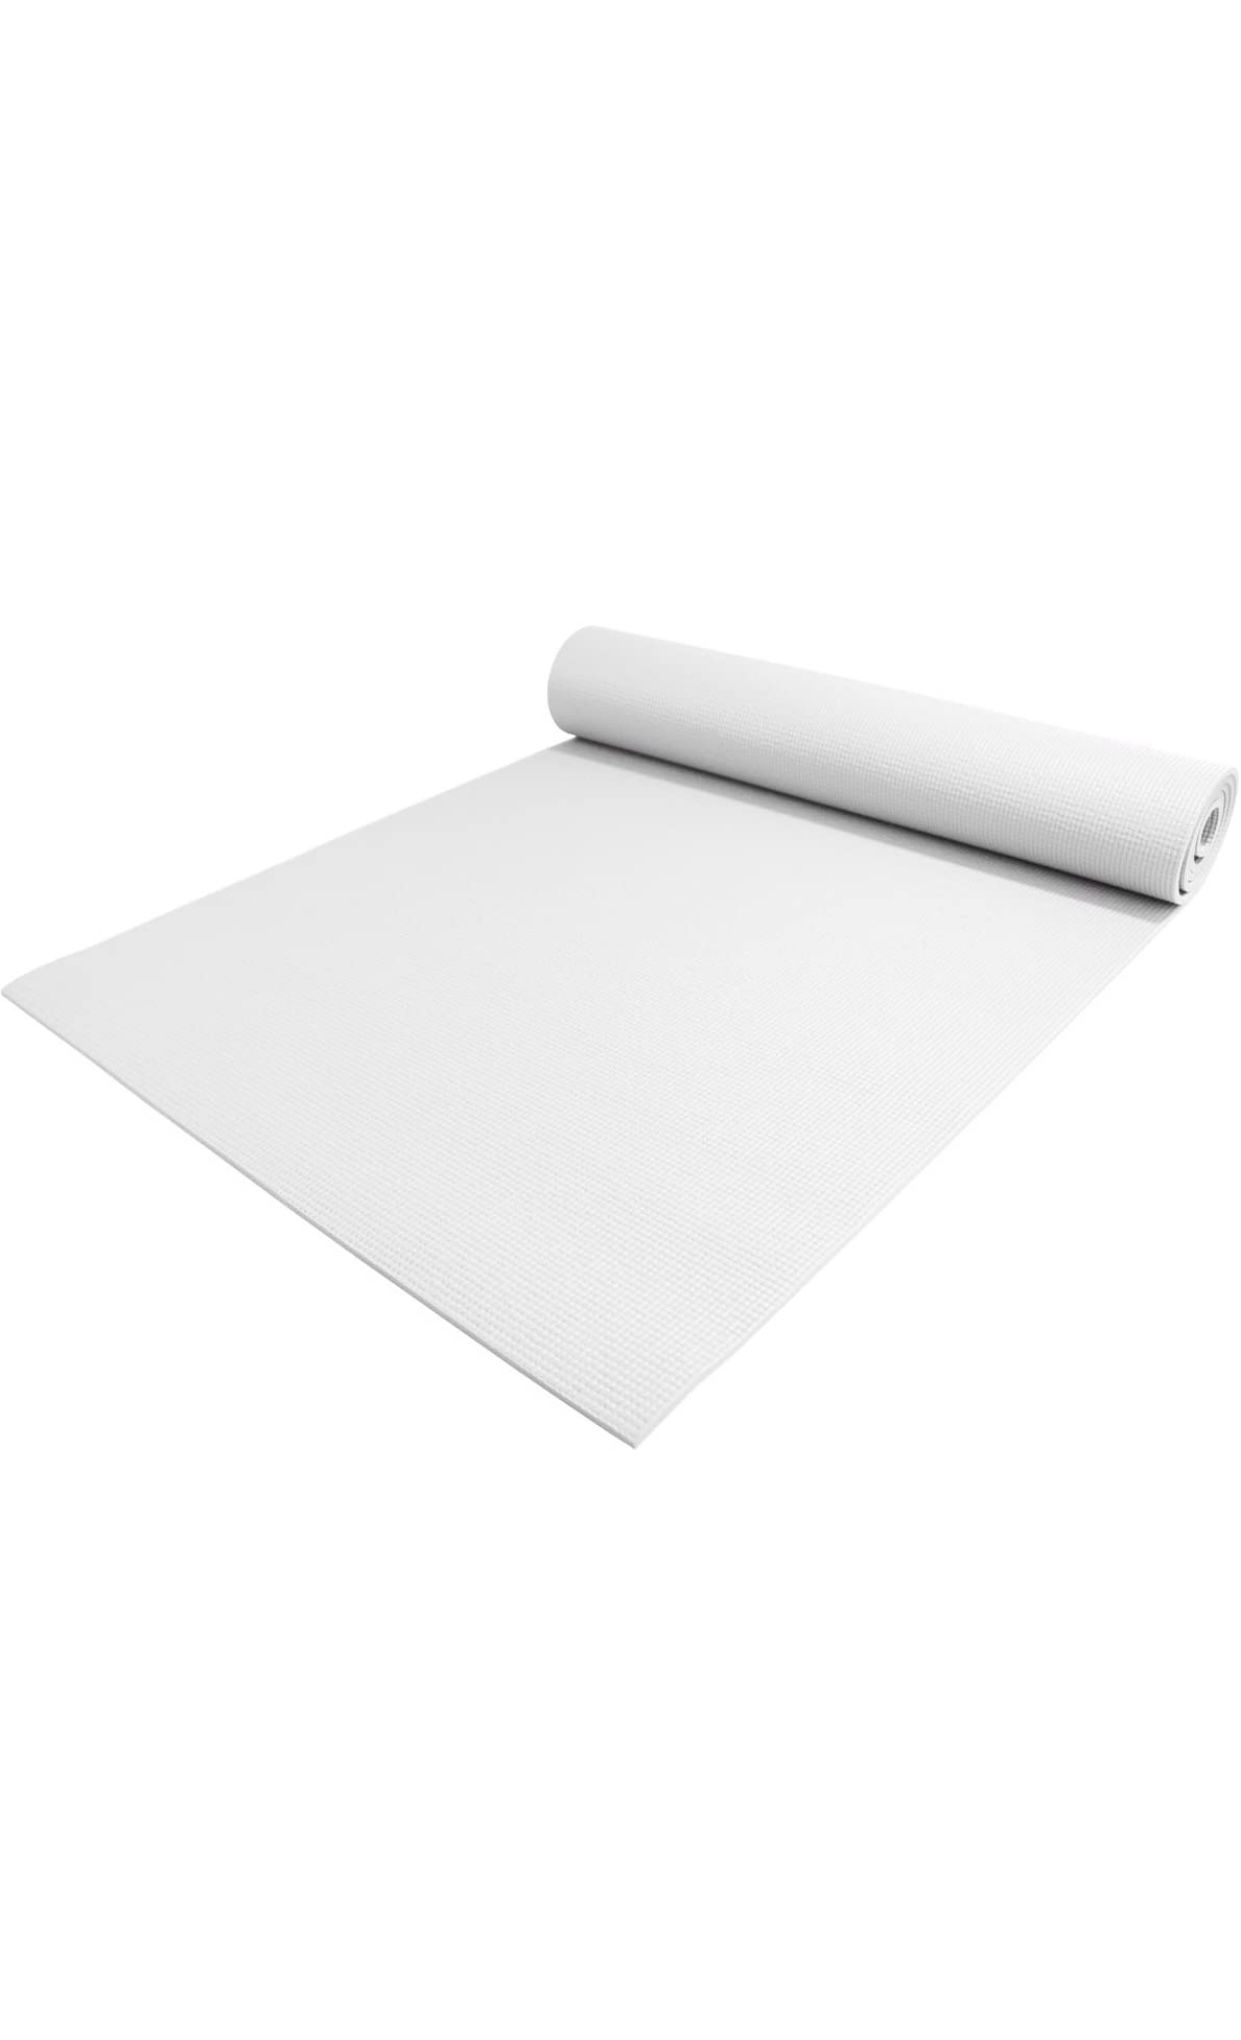 White Yoga Mat (Brand New)